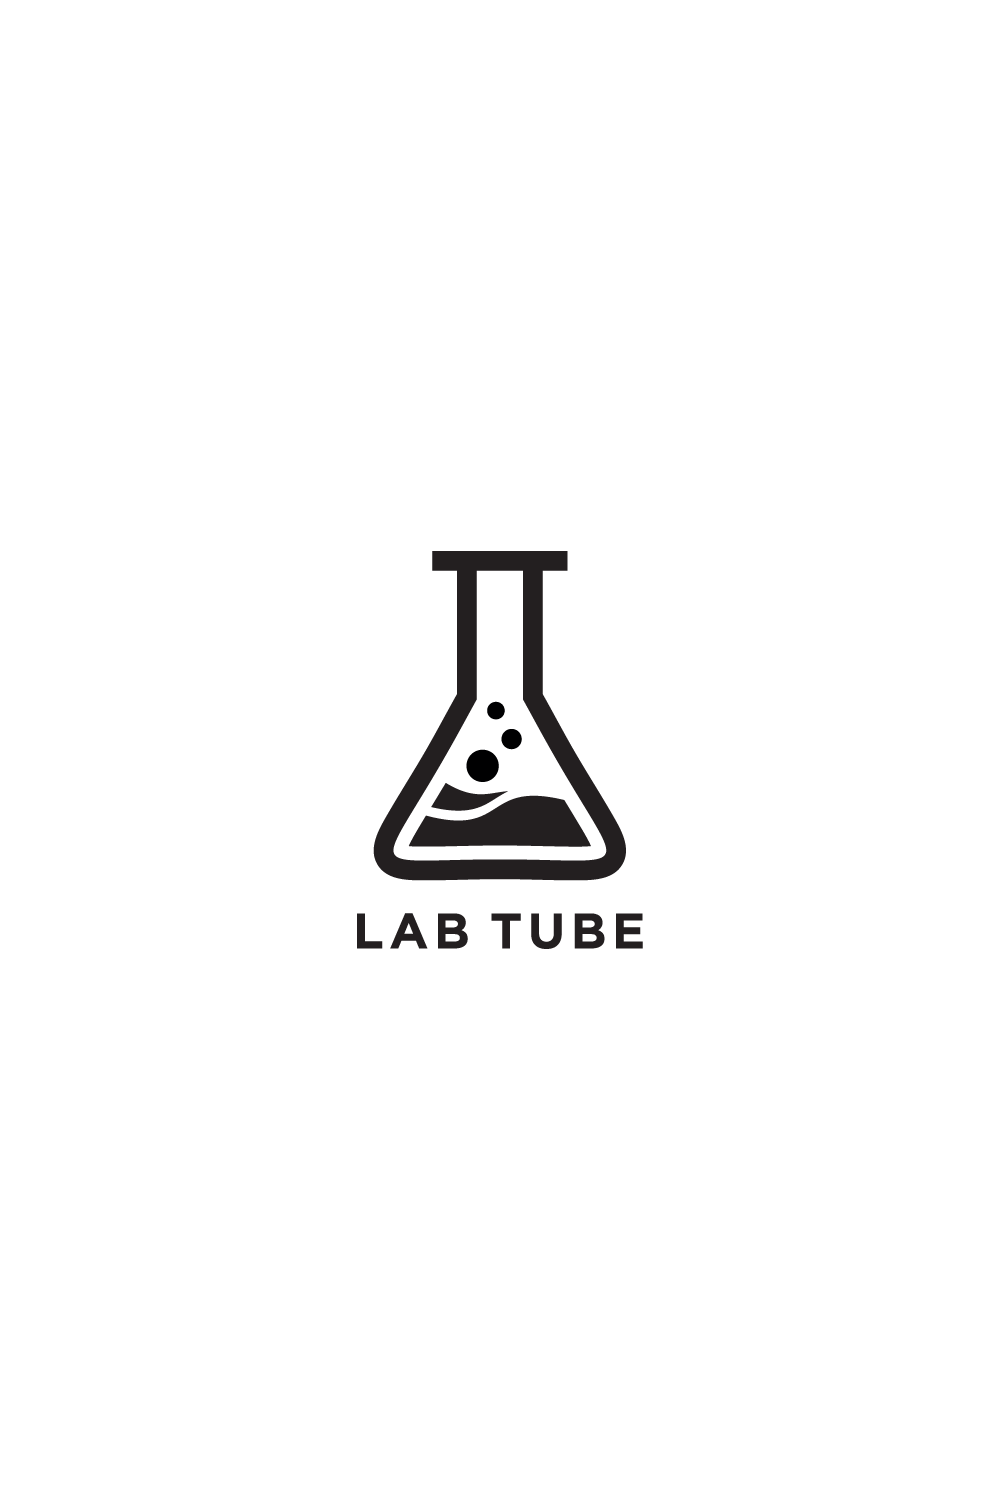 lab bottle logo design template pinterest preview image.